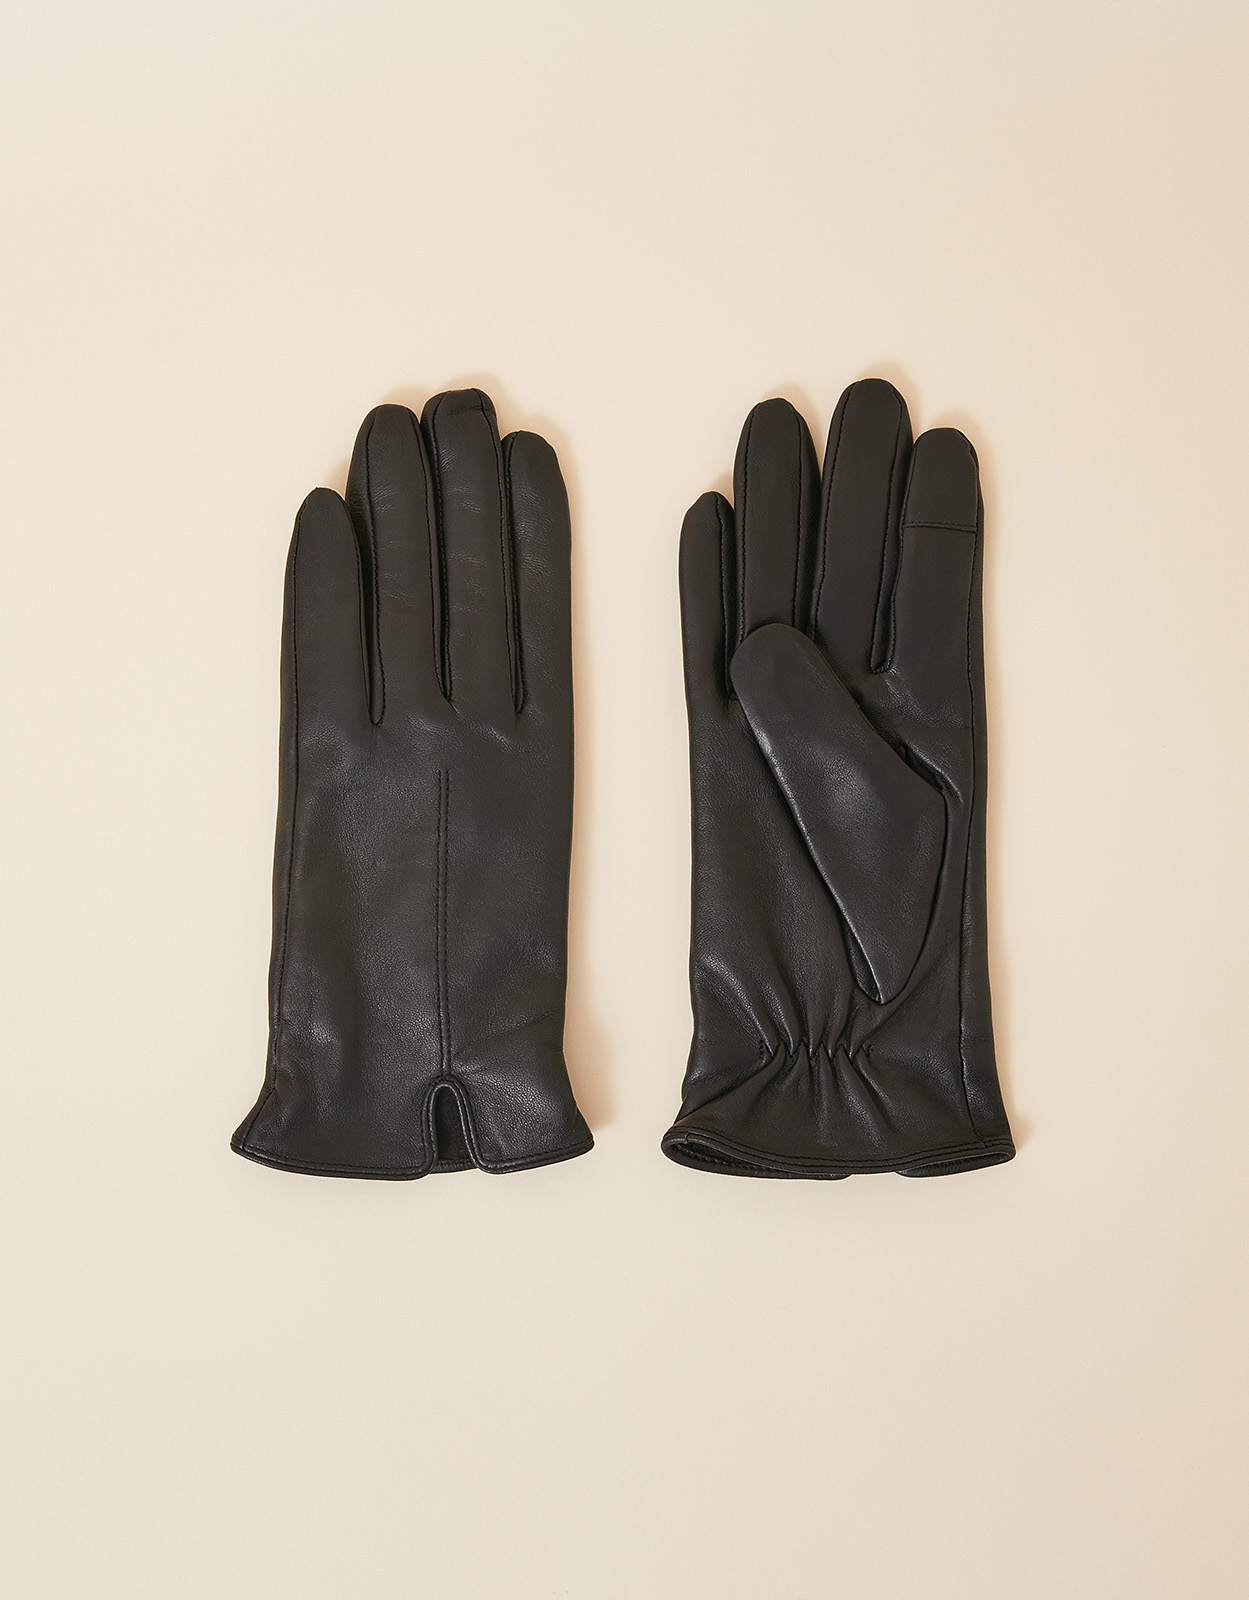 Accessorize Touchscreen Leather Gloves Black, Size: M / L